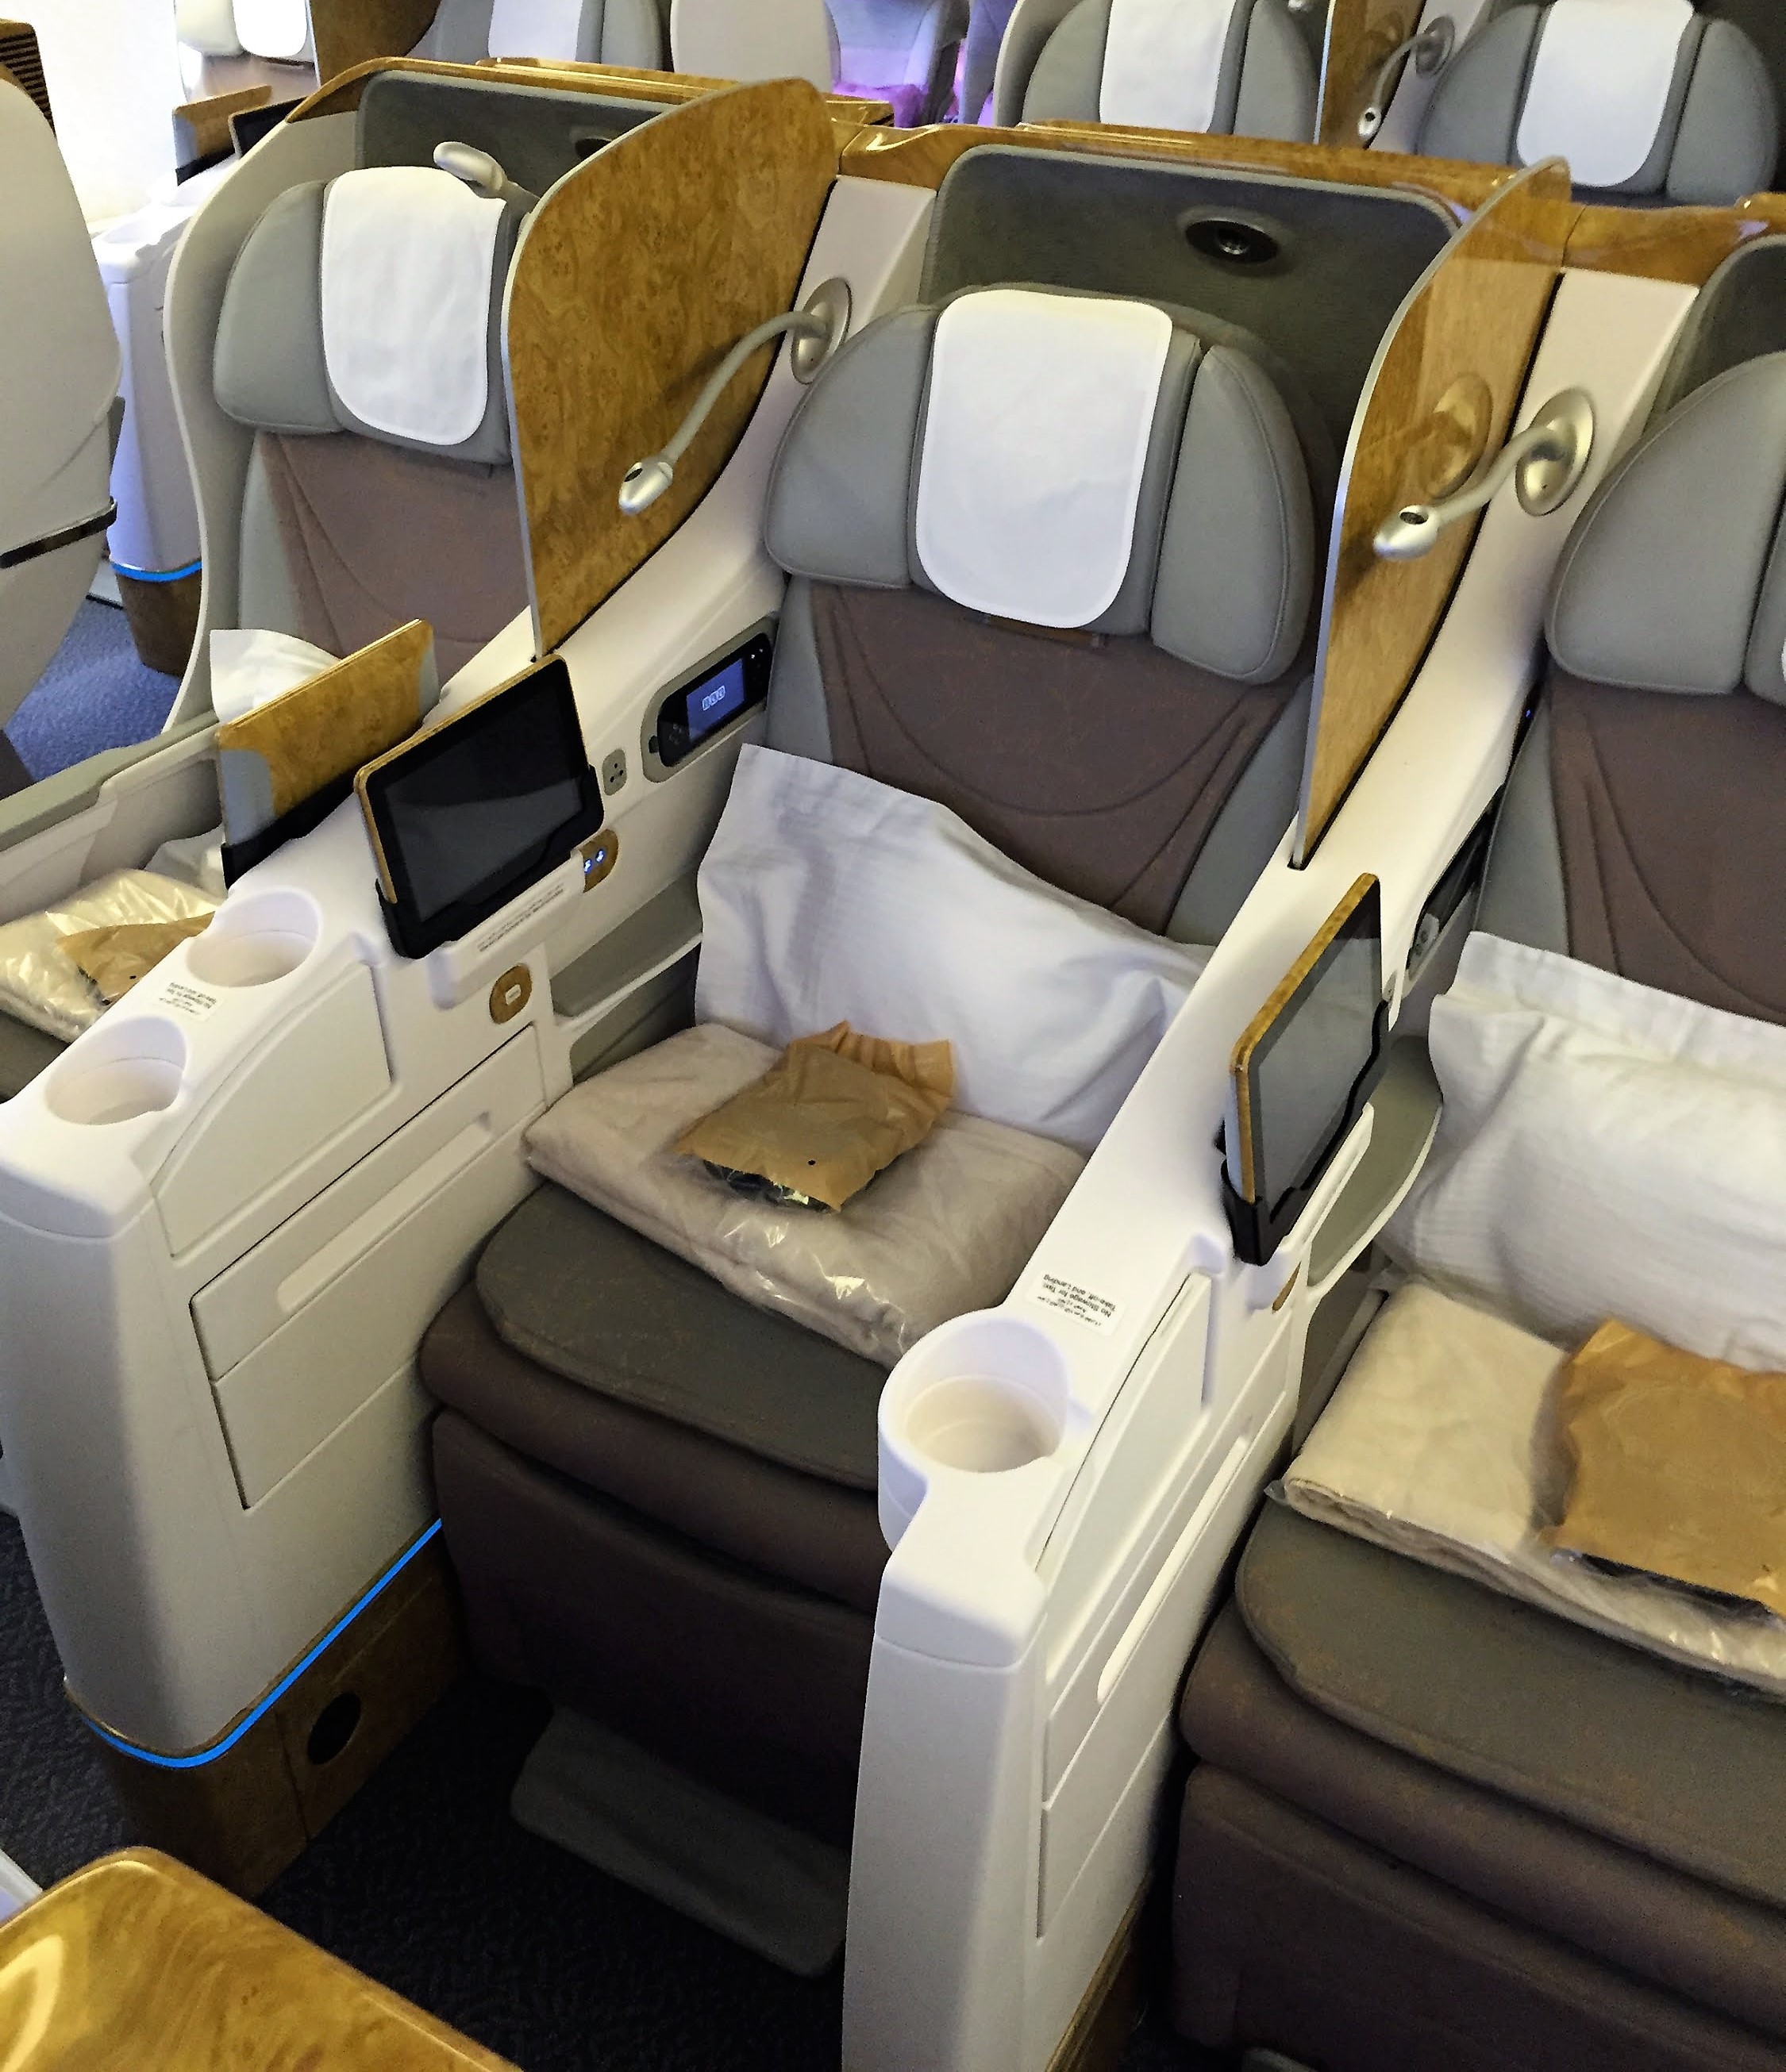 Emirates B777 angled lie flat seat 2-3-2 across